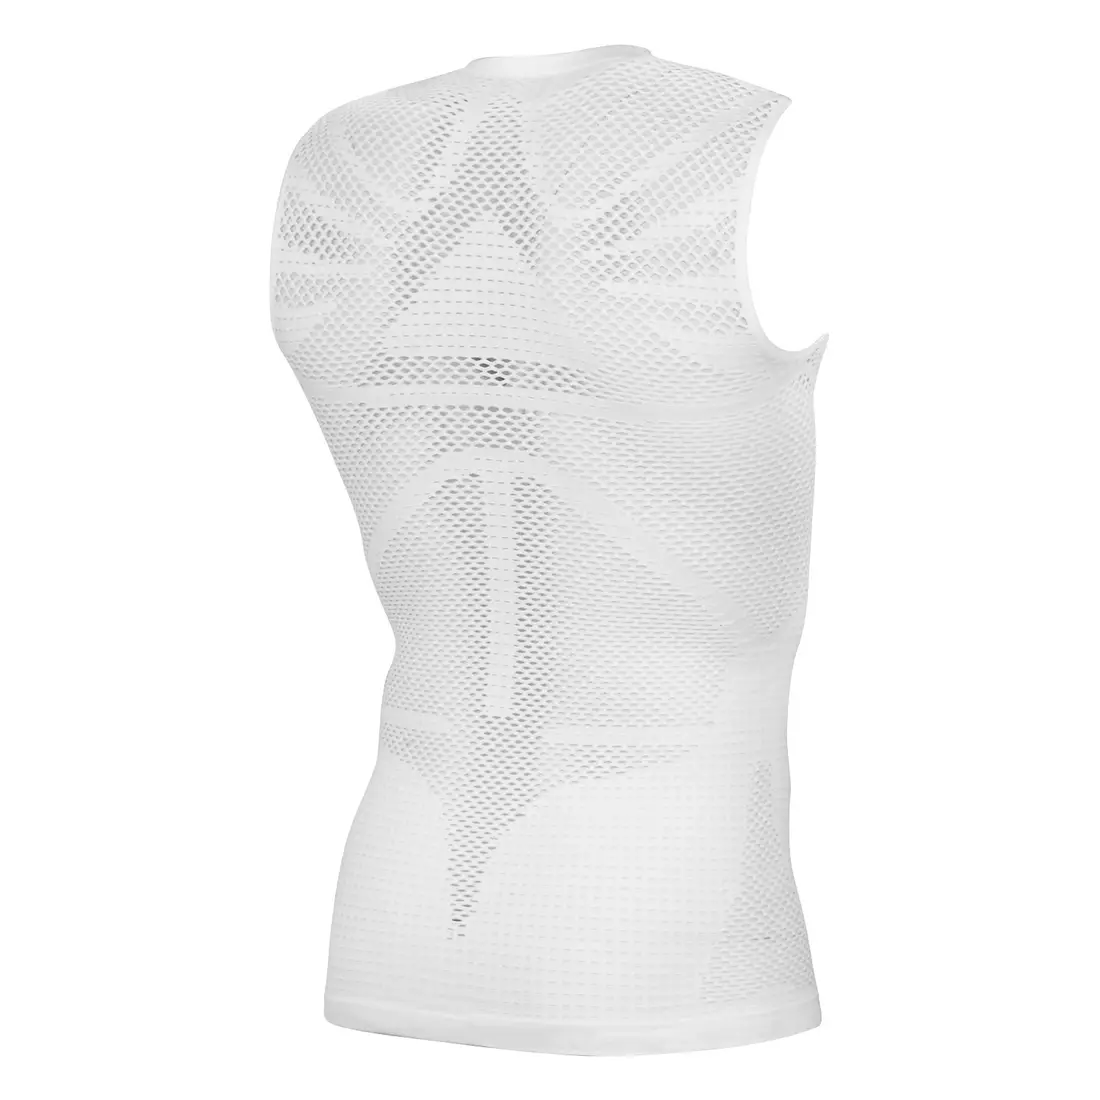 FORCE TROPIC Men's sports sweatshirt, sleeveless, white 903402